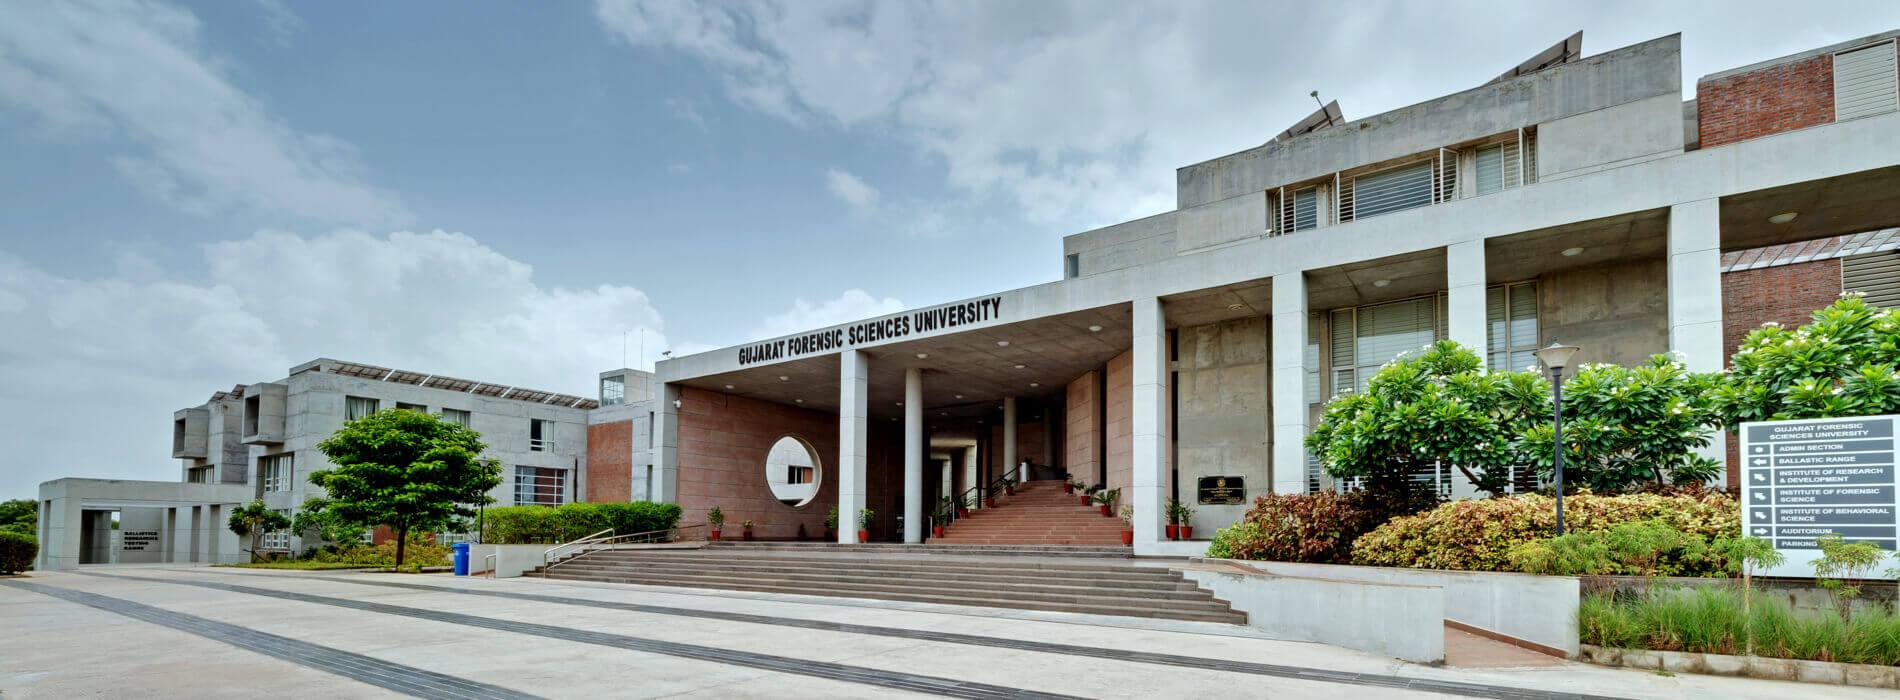 GFSU (Gujarat Forensic Sciences University)